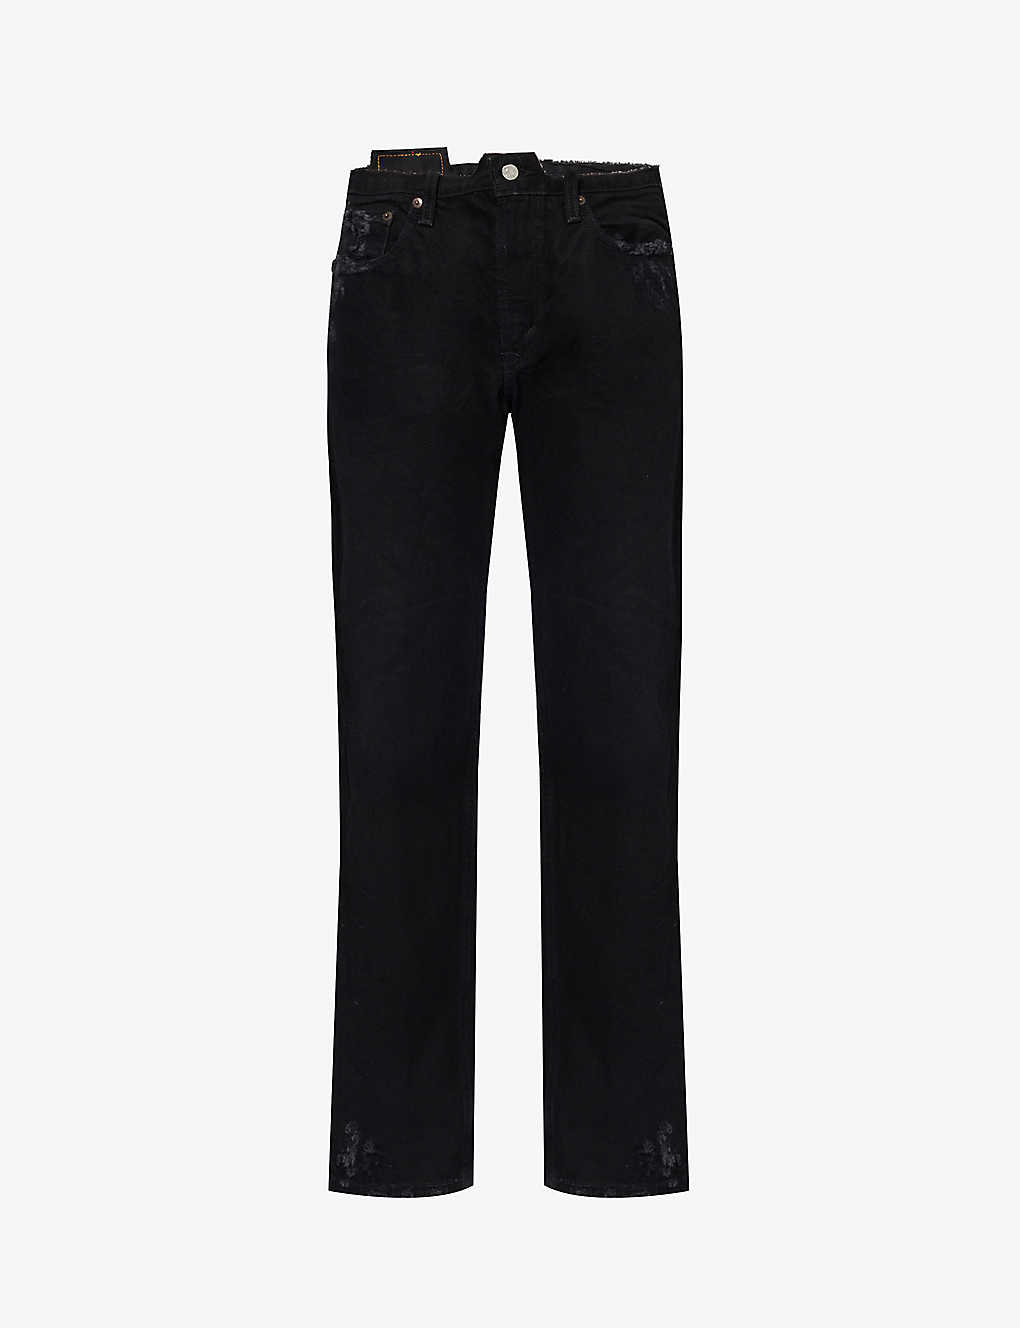 Jean Vintage Womens Black Straight-leg High-rise Denim Jeans